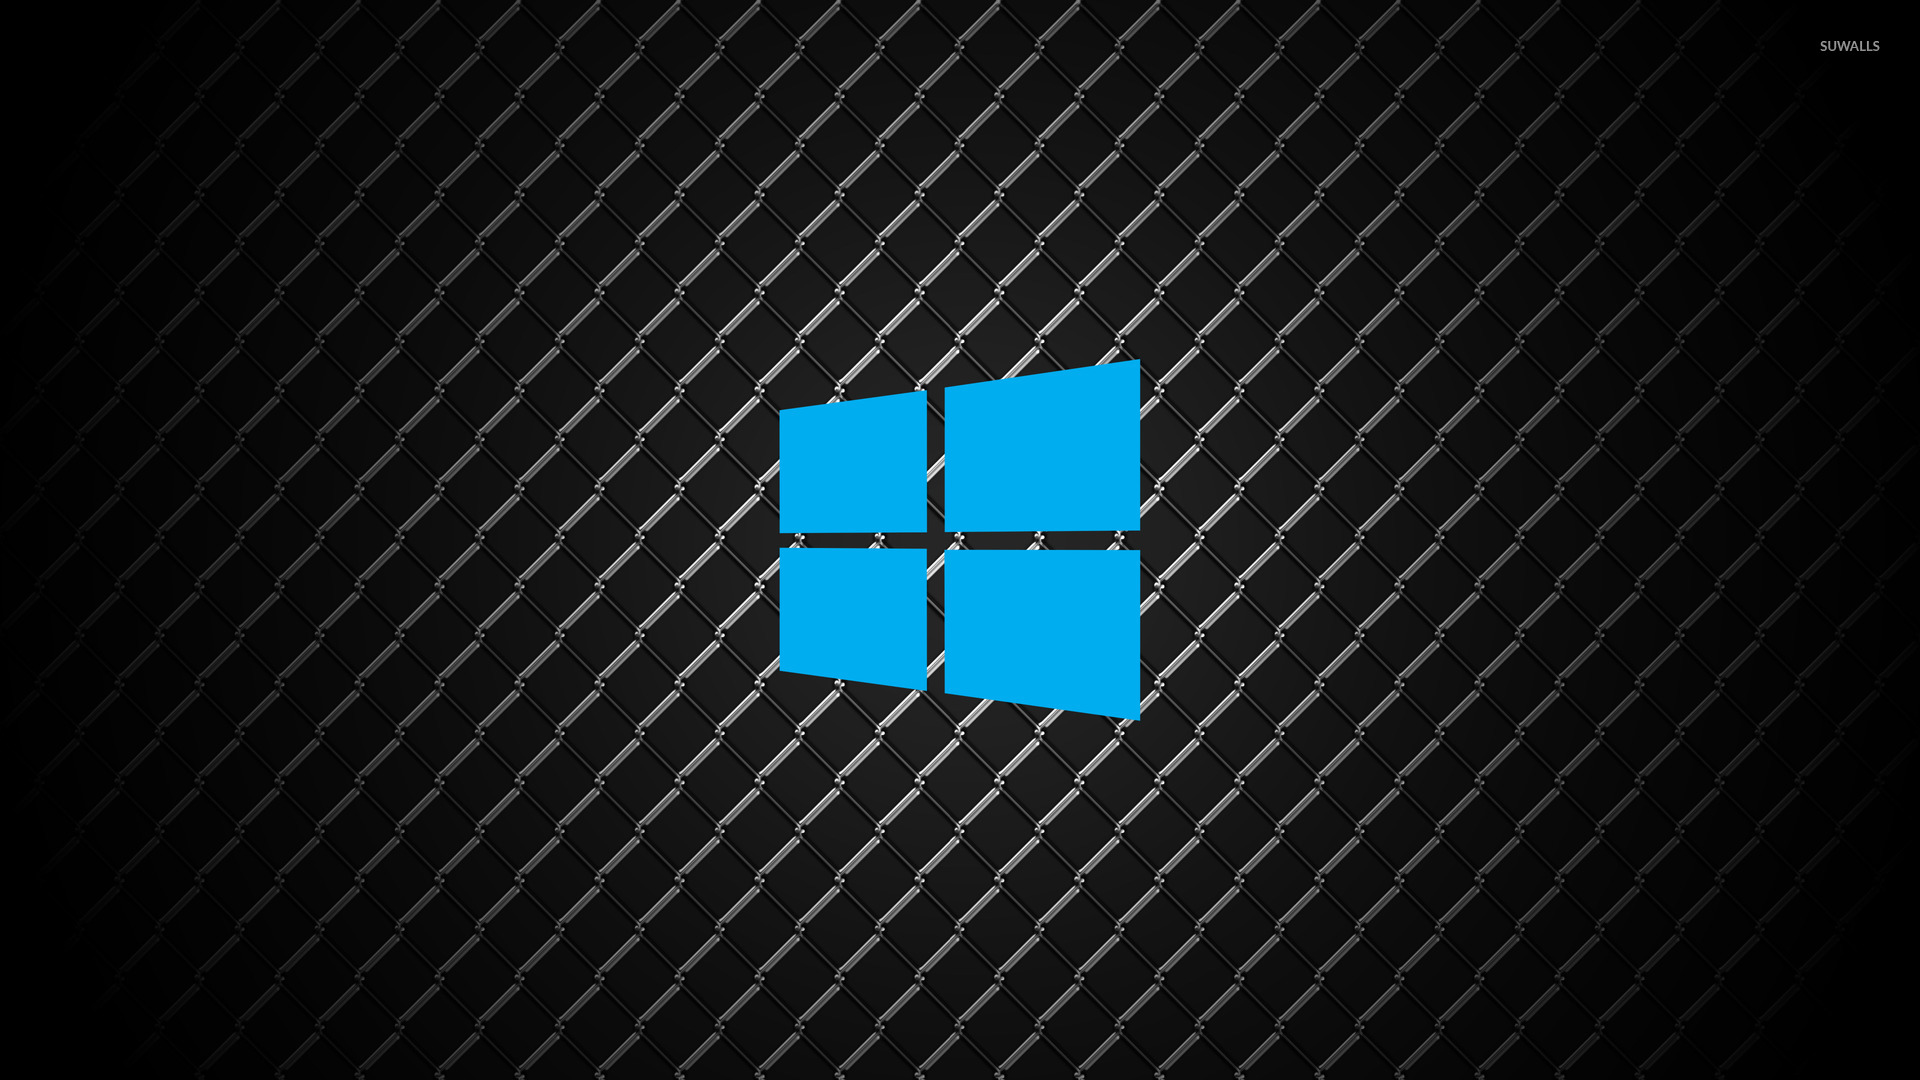 Windows 10 simple blue logo on metal wallpaper - Computer wallpapers ...